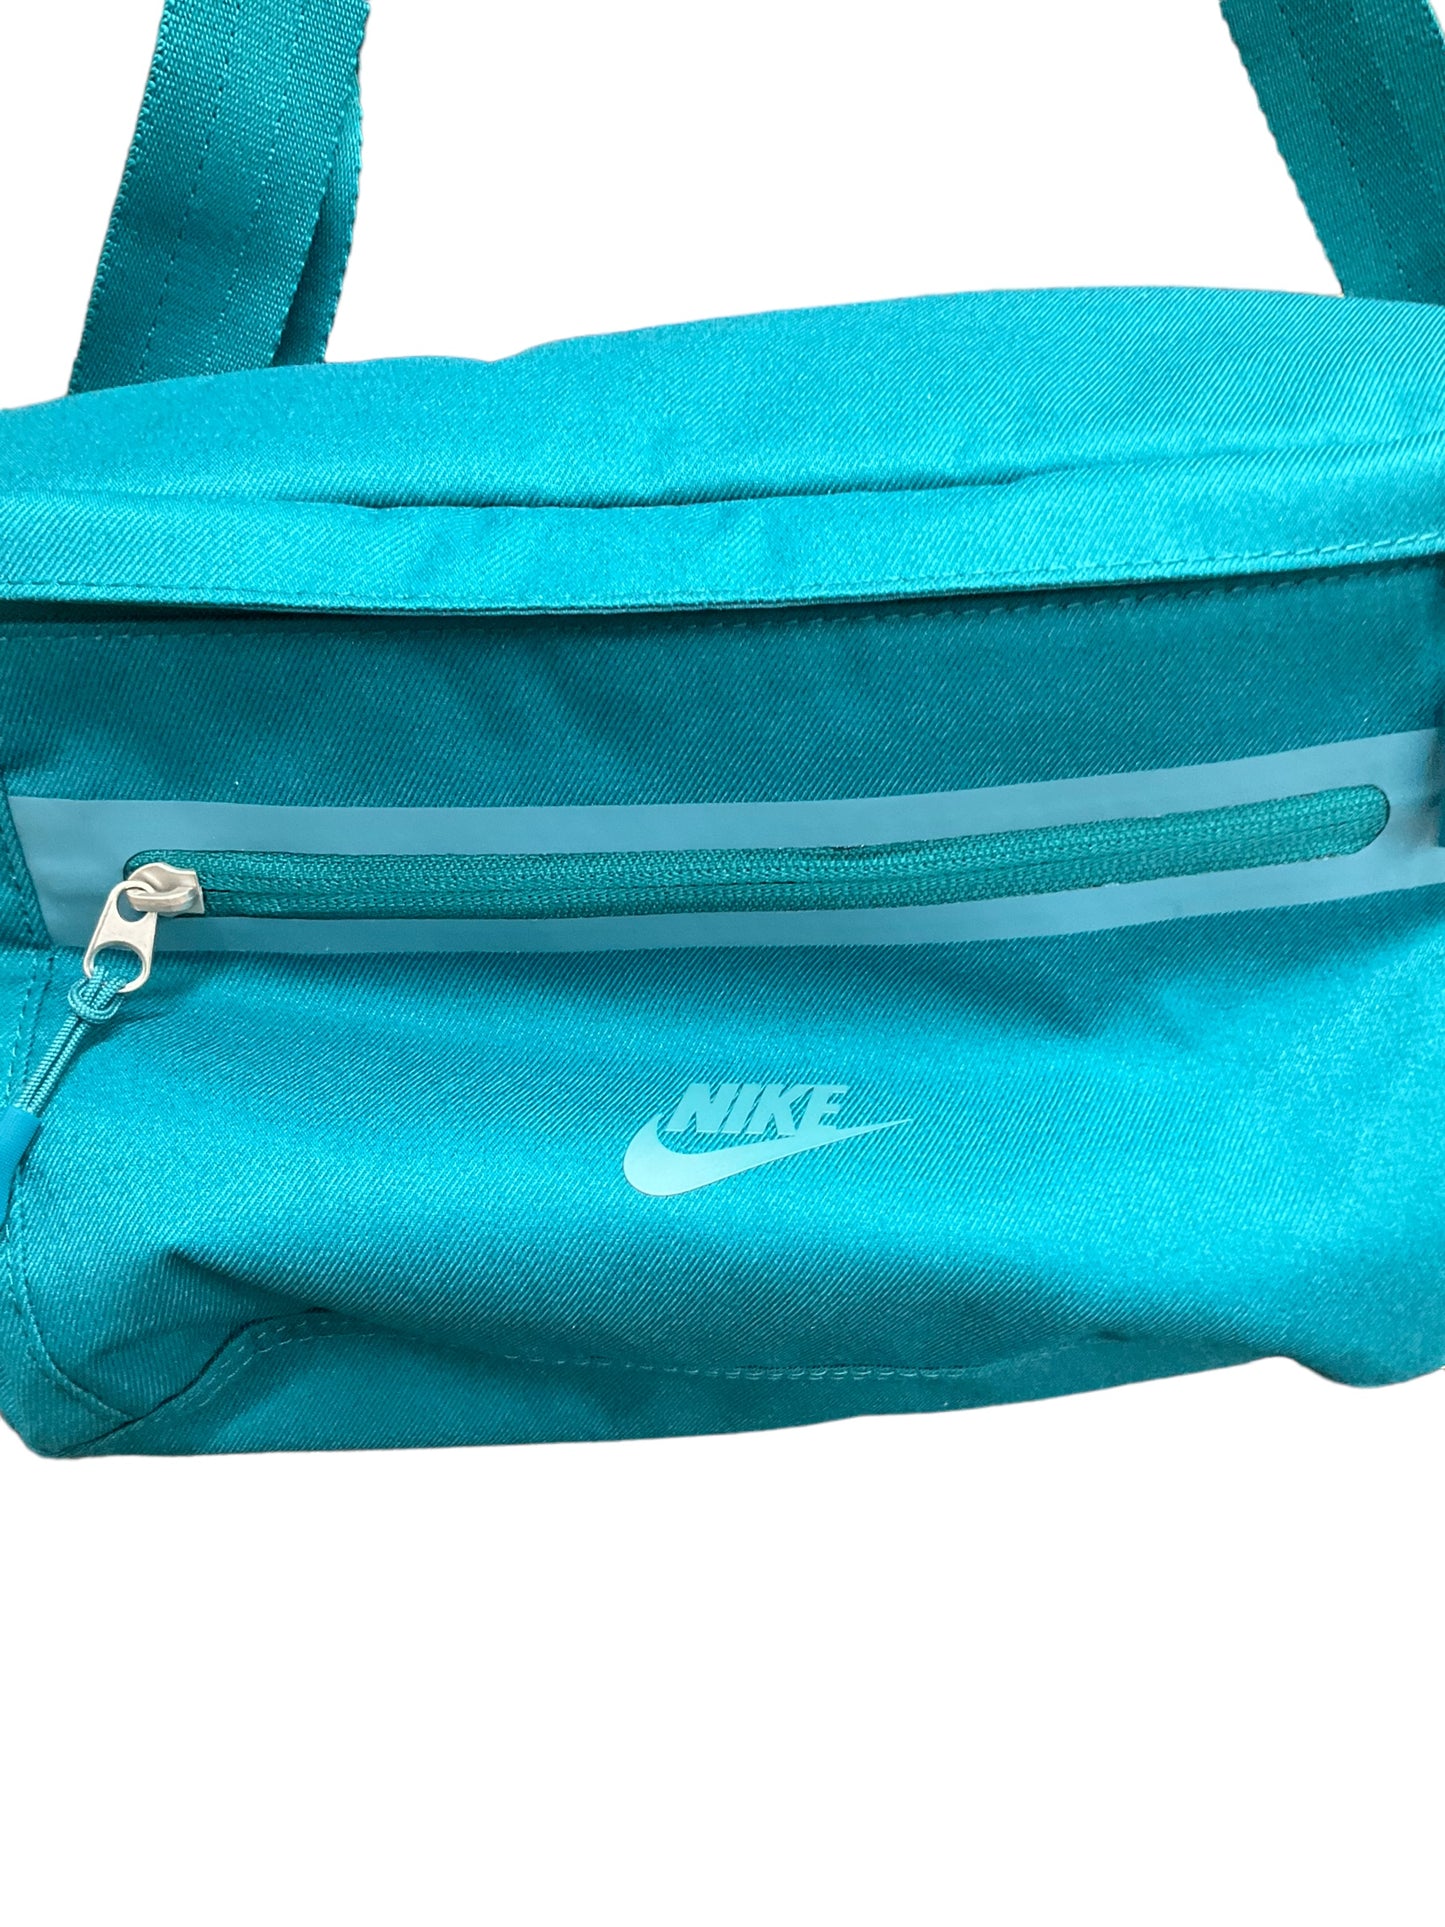 Belt Bag By Nike  Size: Large